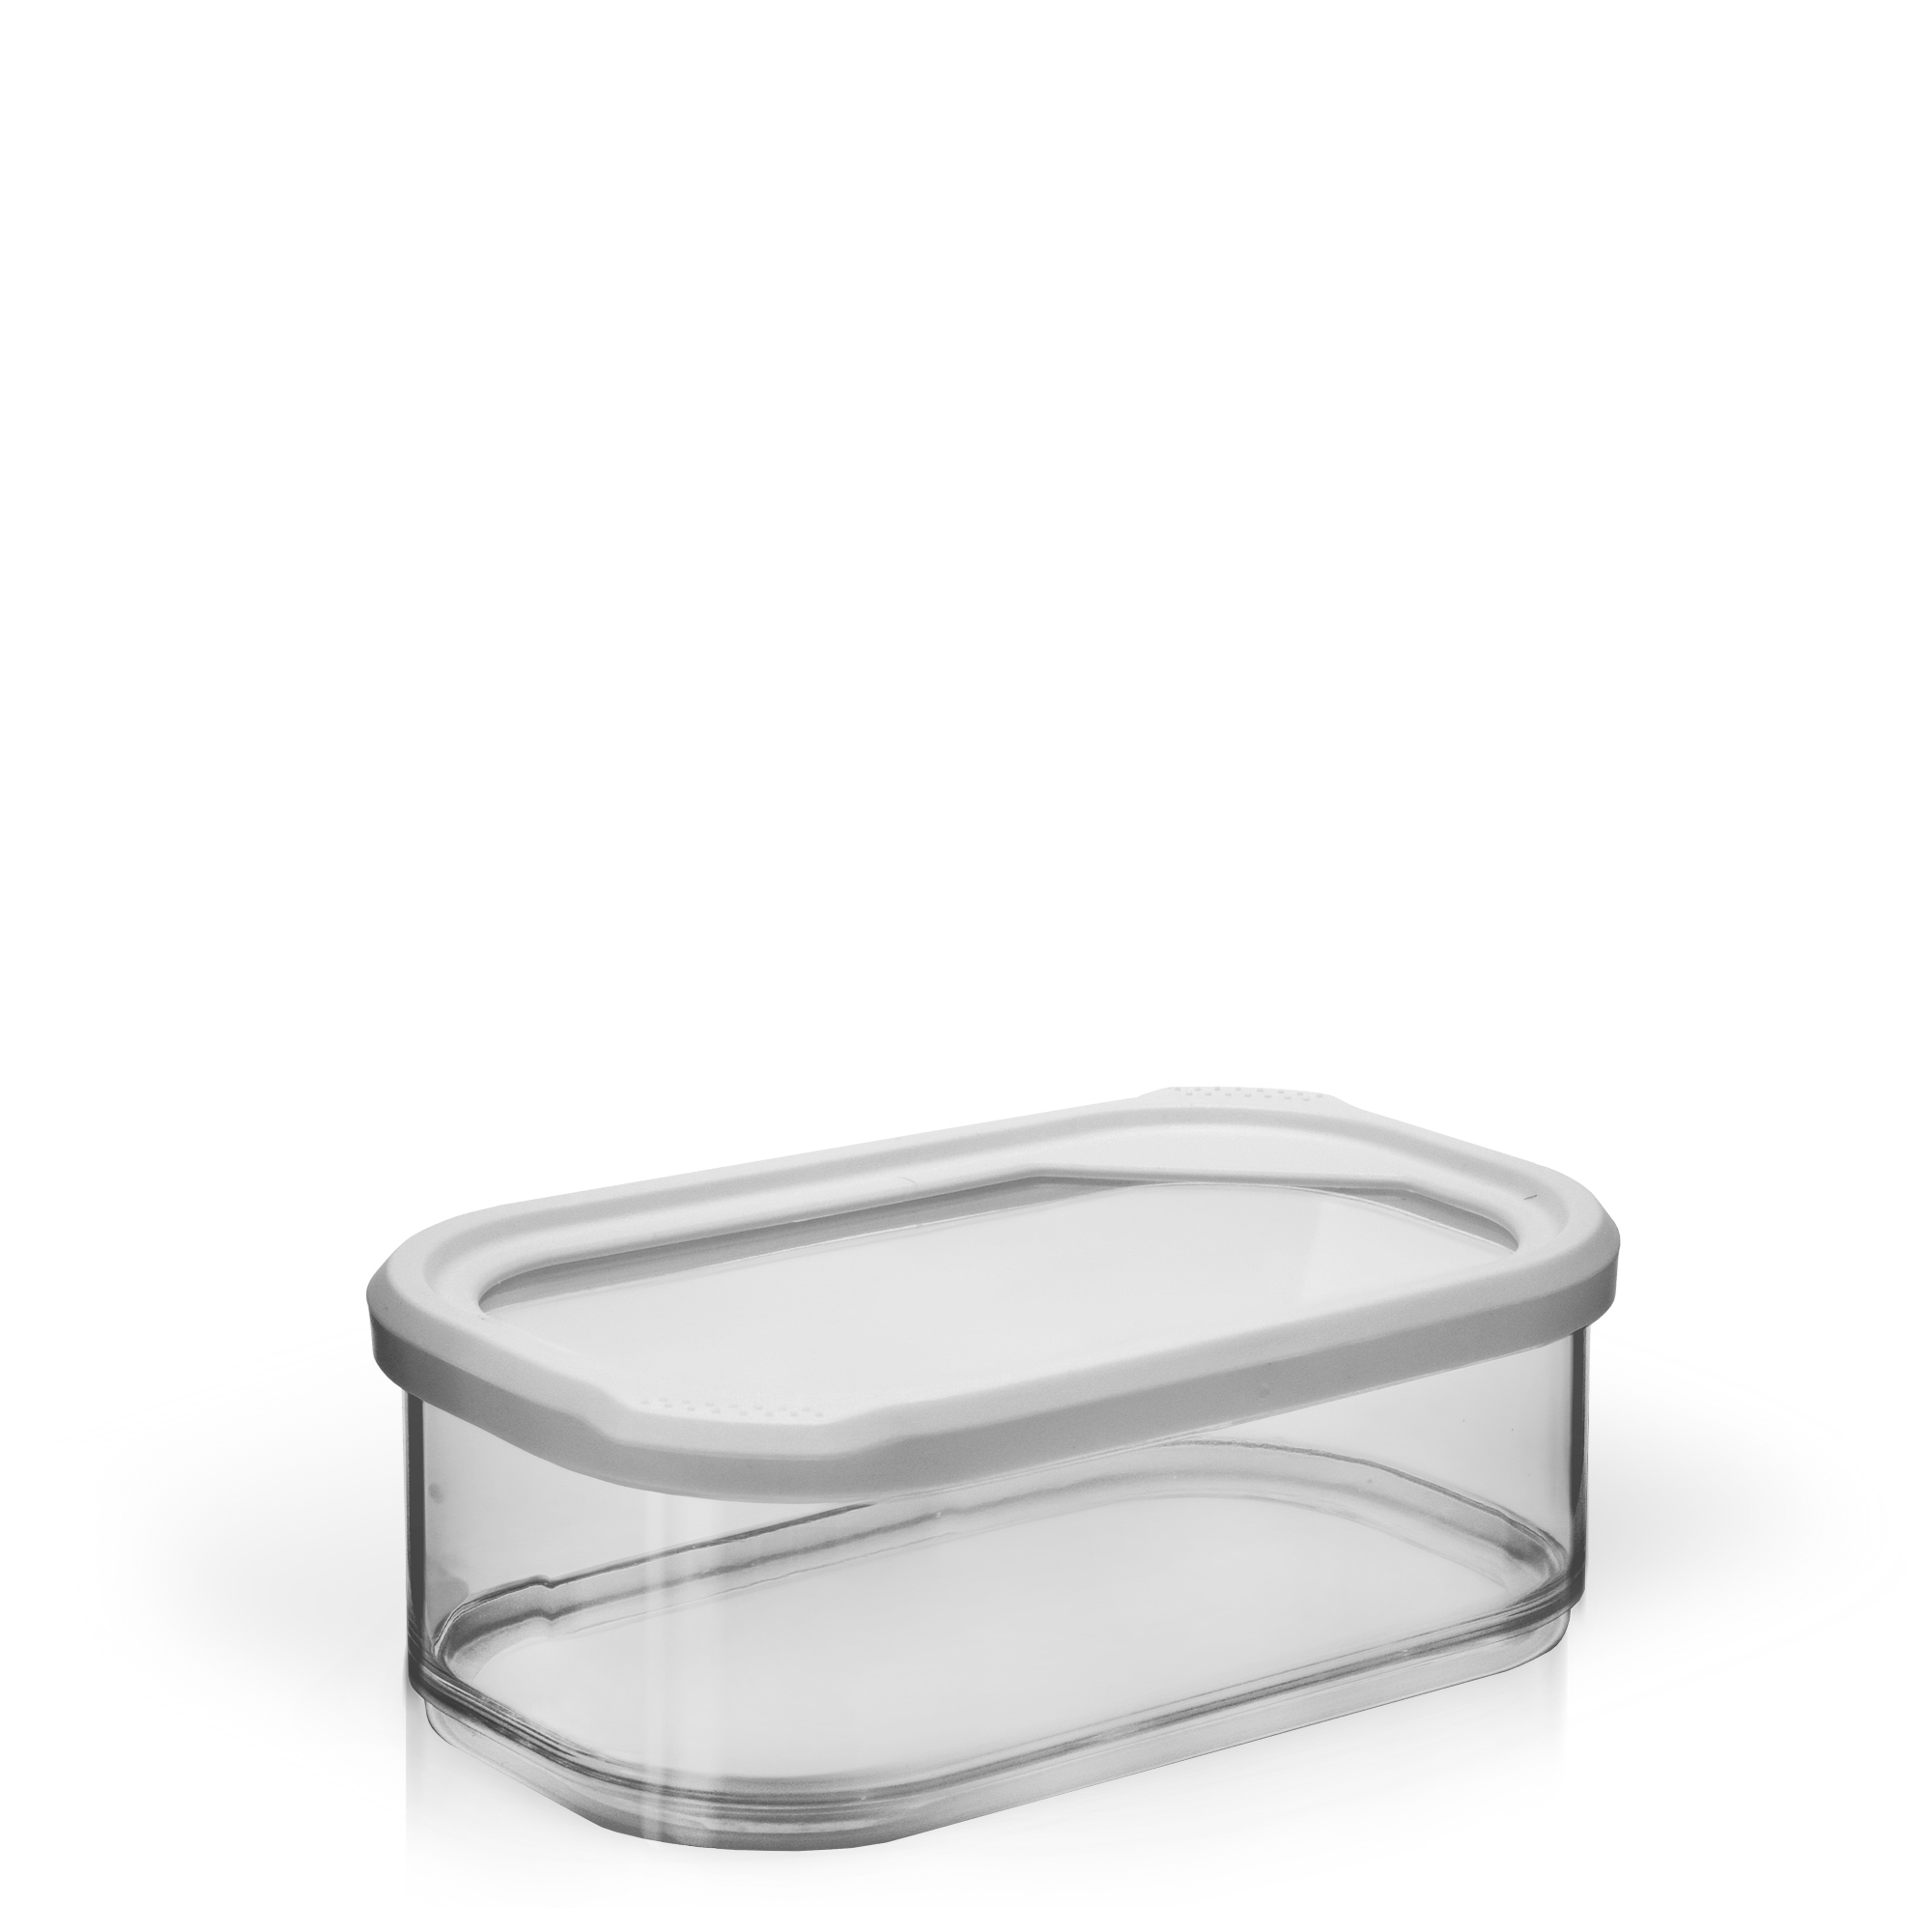 Culinaris - Storage Container  - 0.45 L